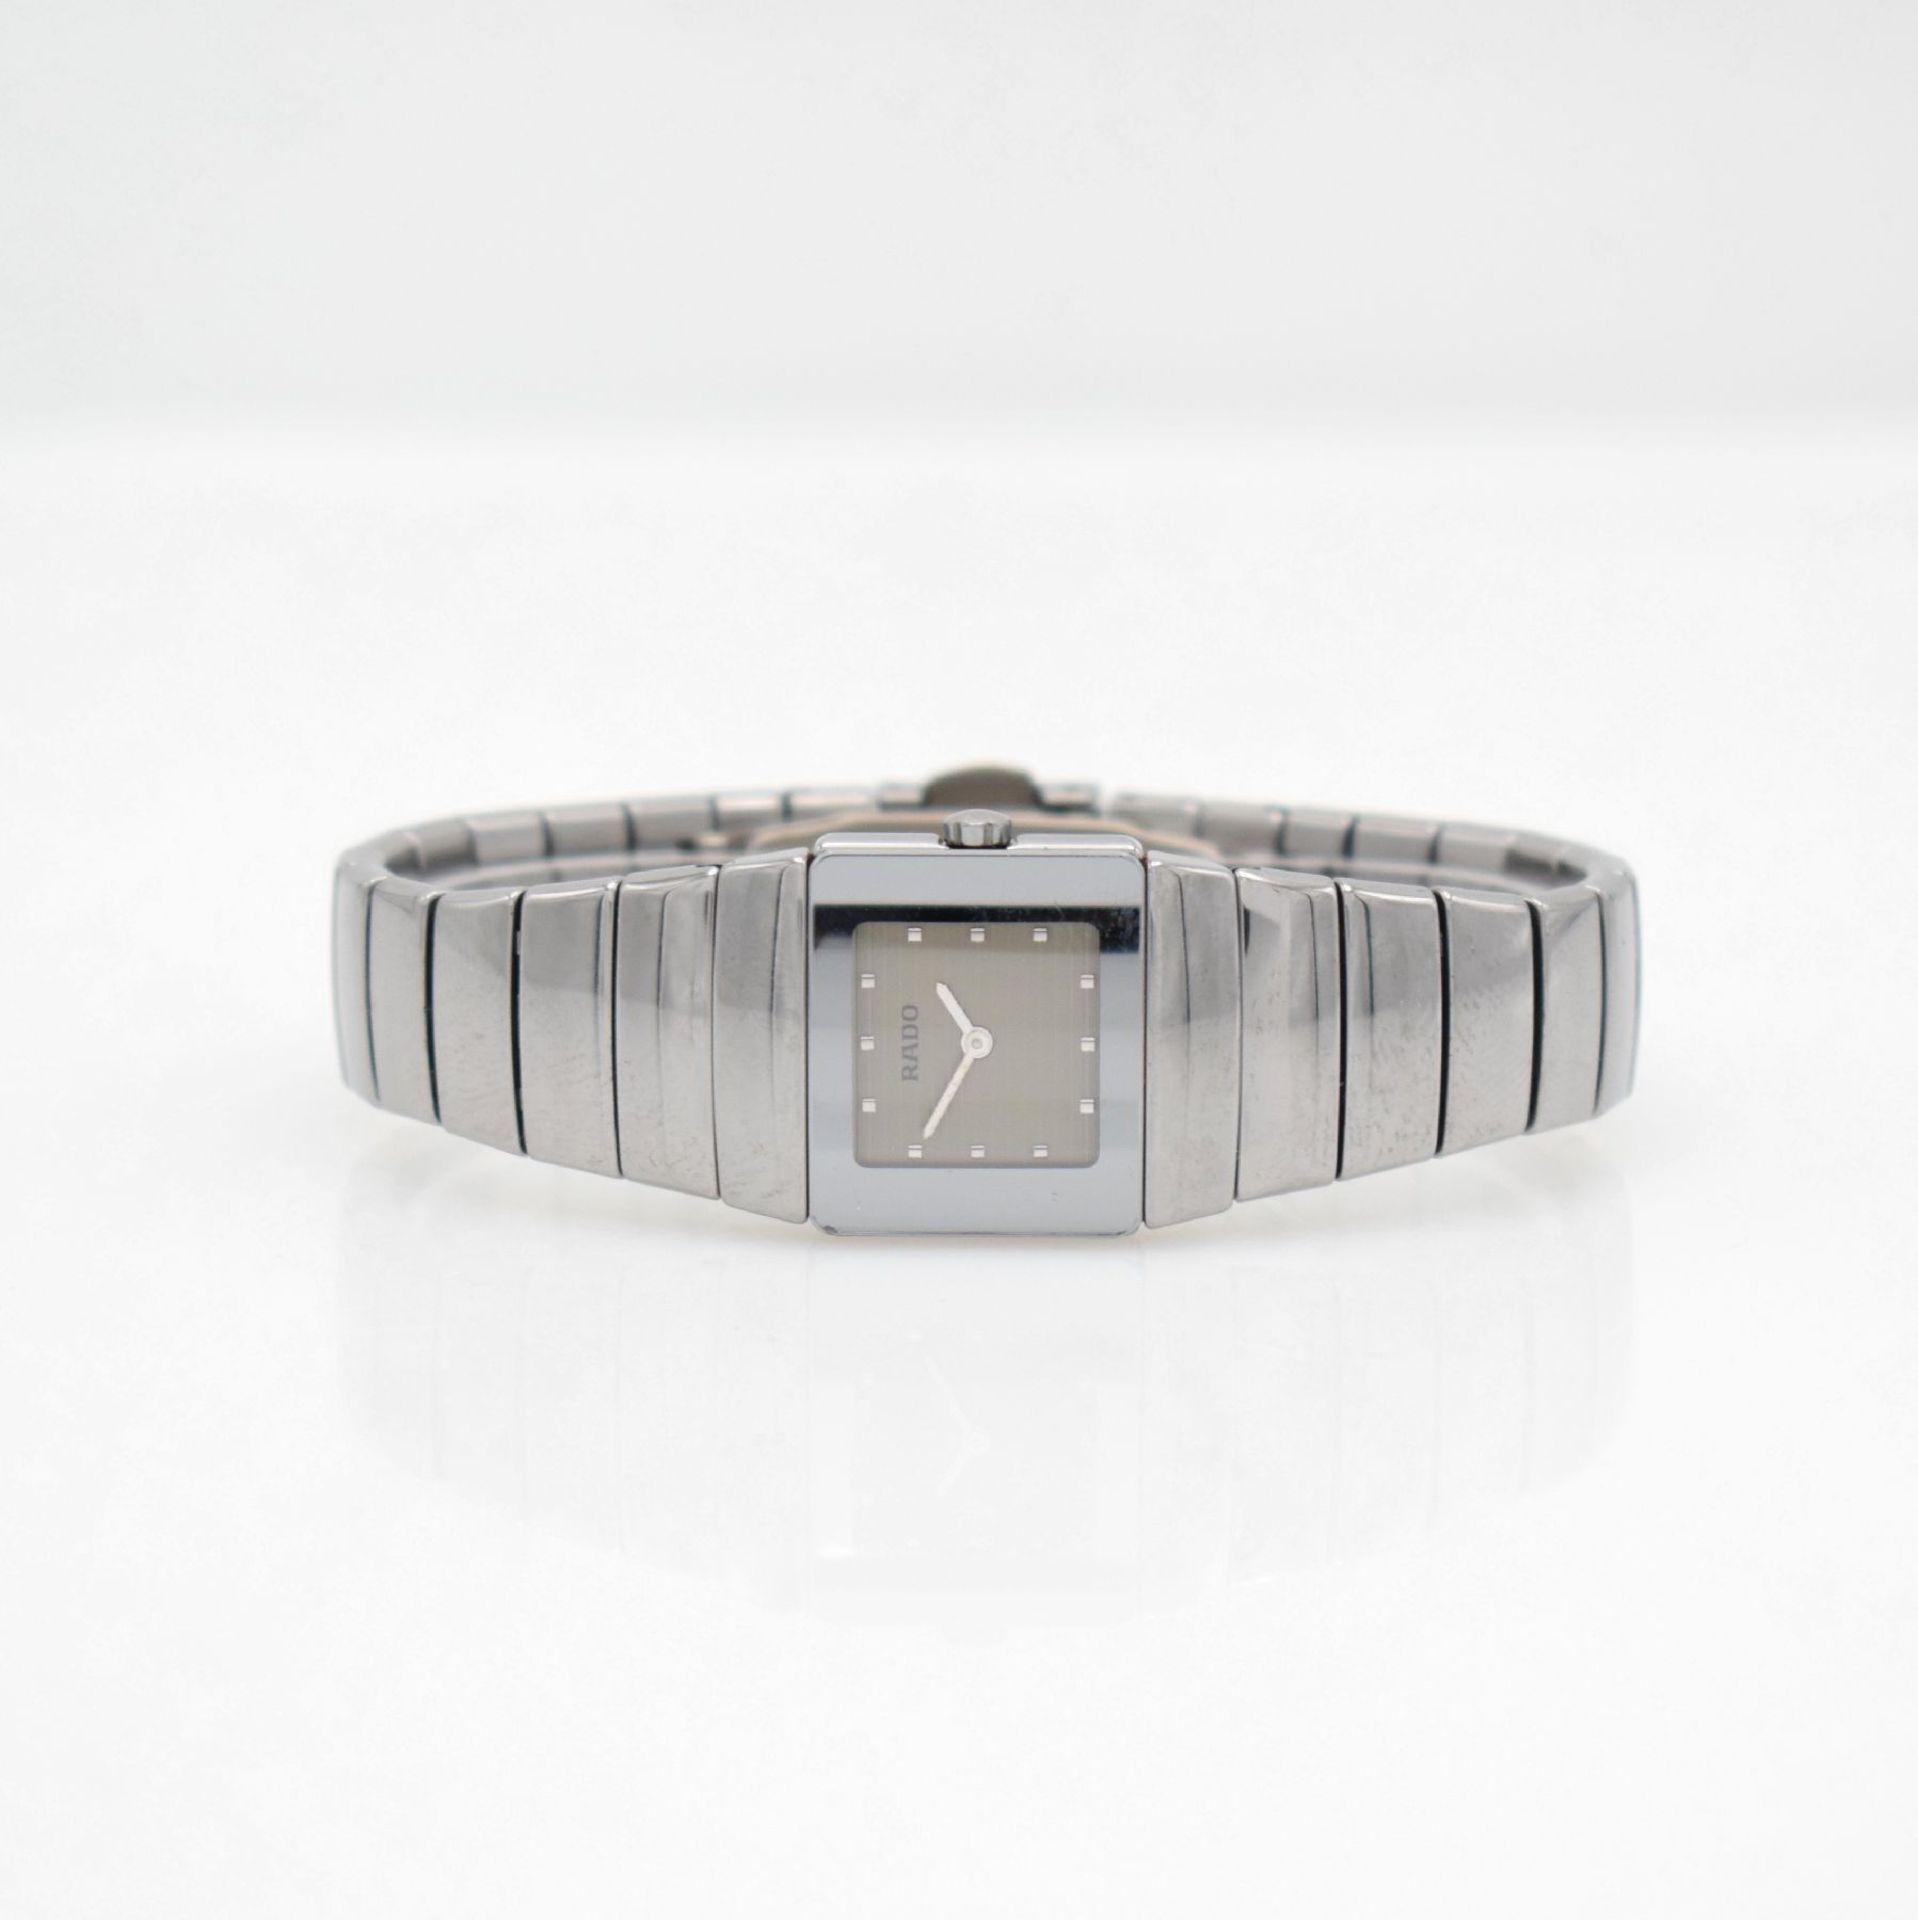 RADO Diastar ladies wristwatch, Switzerland around 2005, quartz, reference 153.0334.3, ceramic